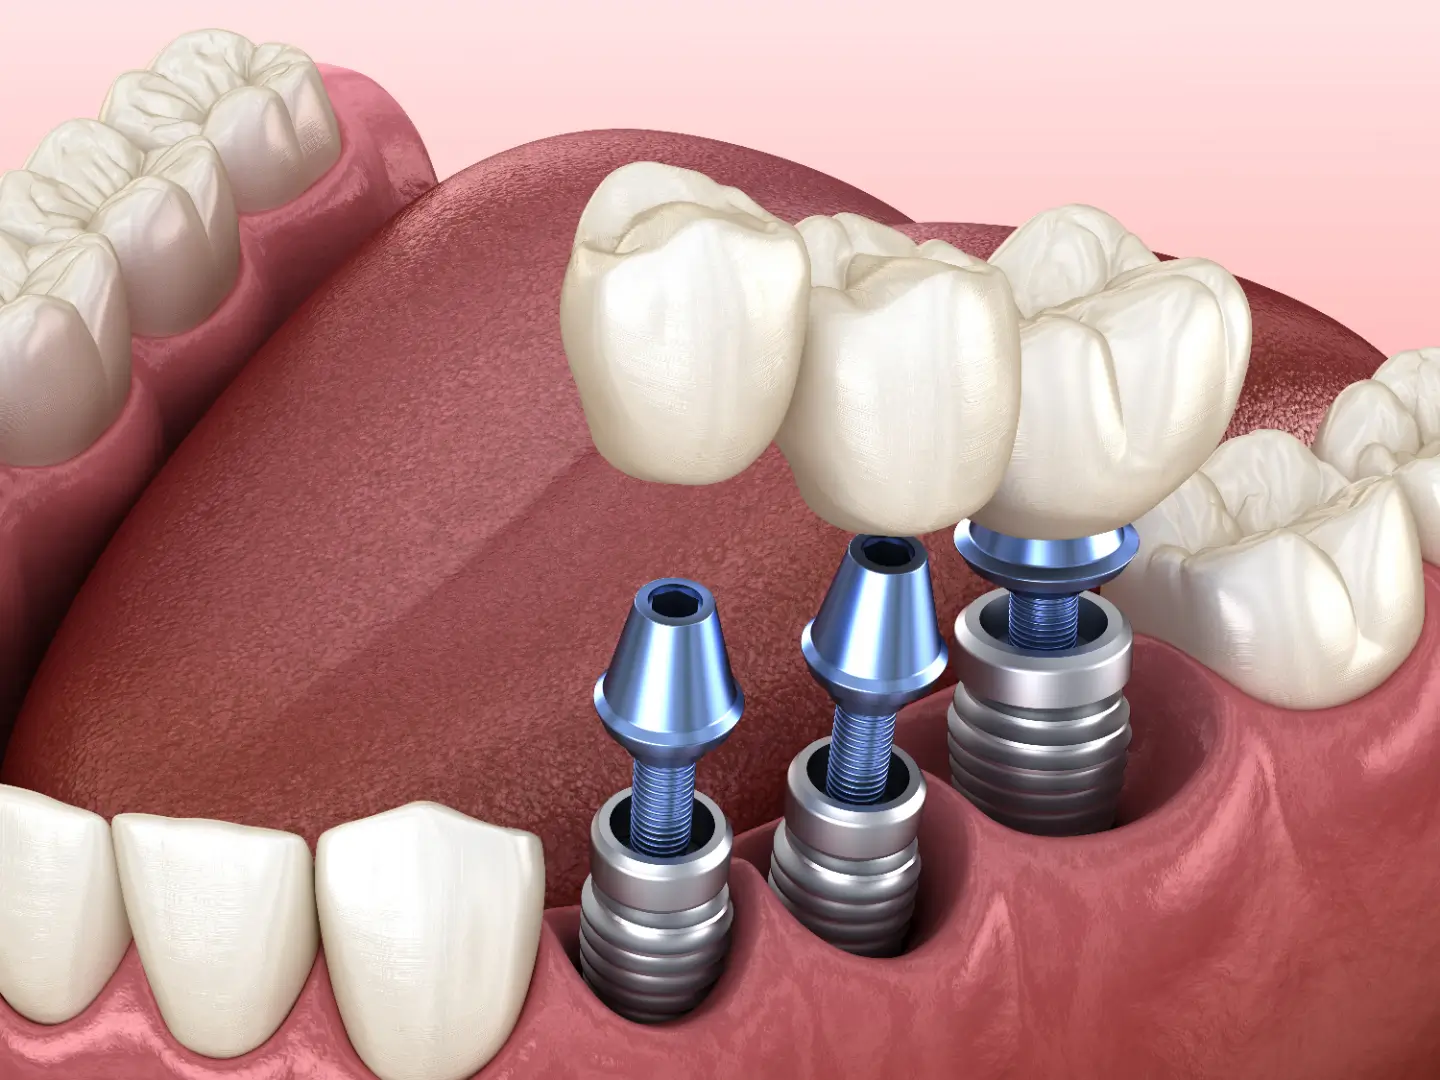 Permanent dental implants